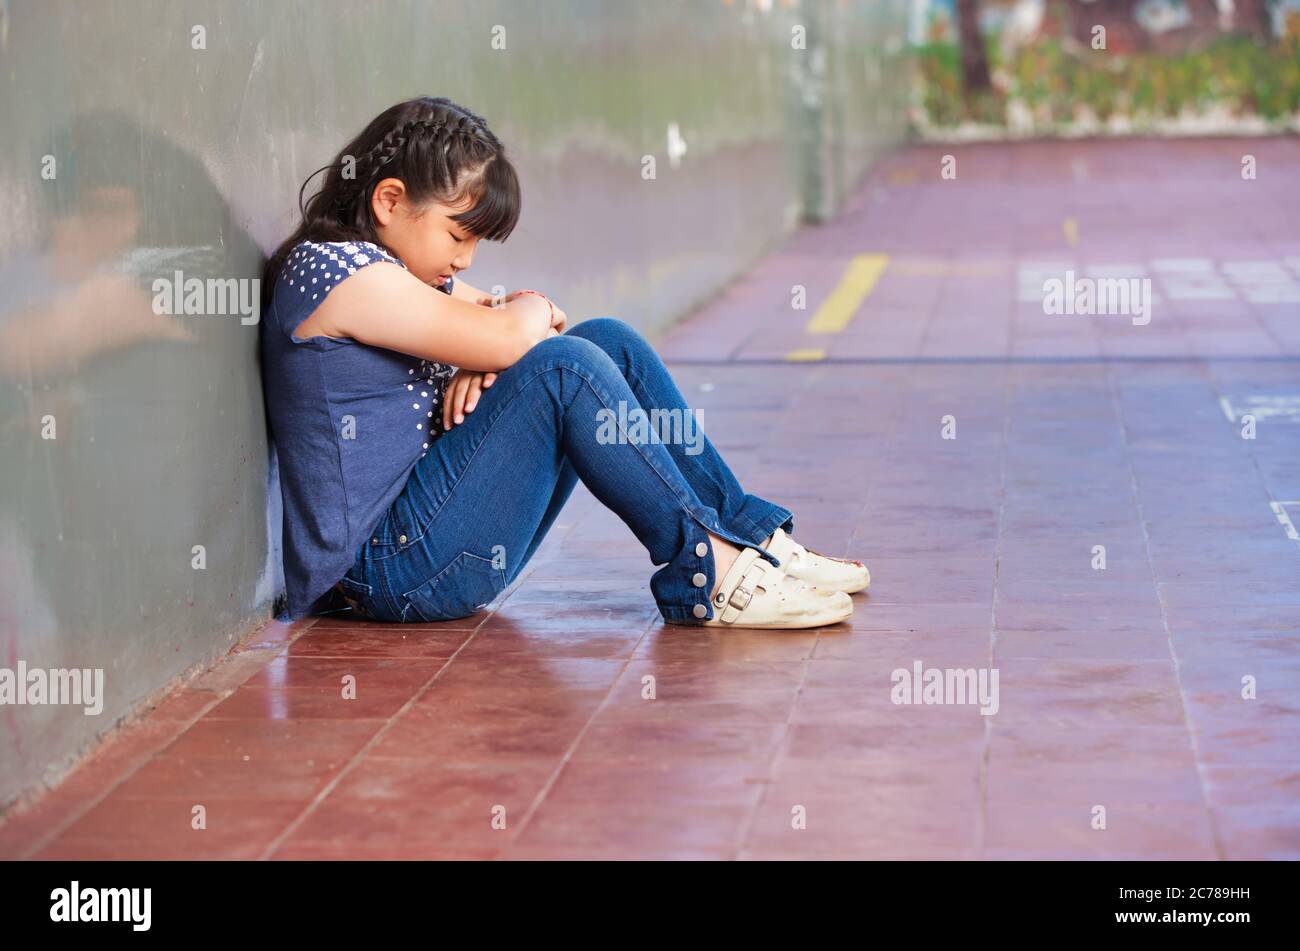 Elementary school scene. Asian girl bullied and sad. Stock Photo